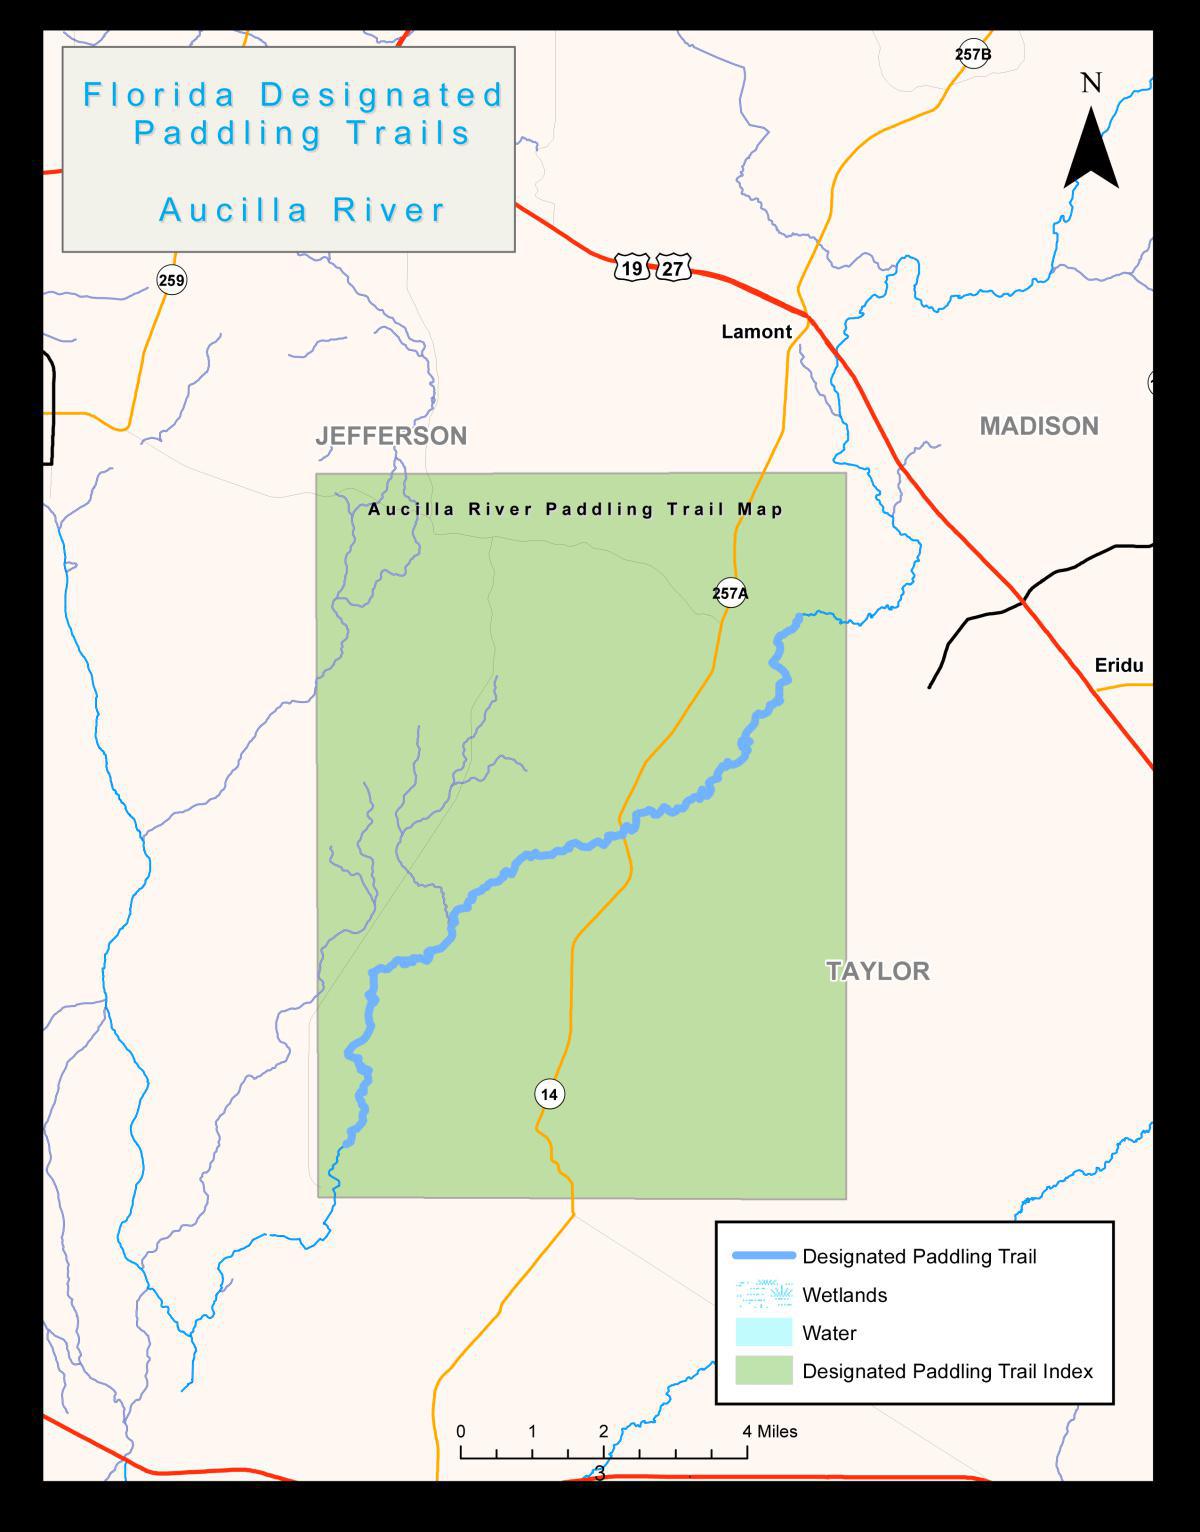 Aucilla River Paddling Trail